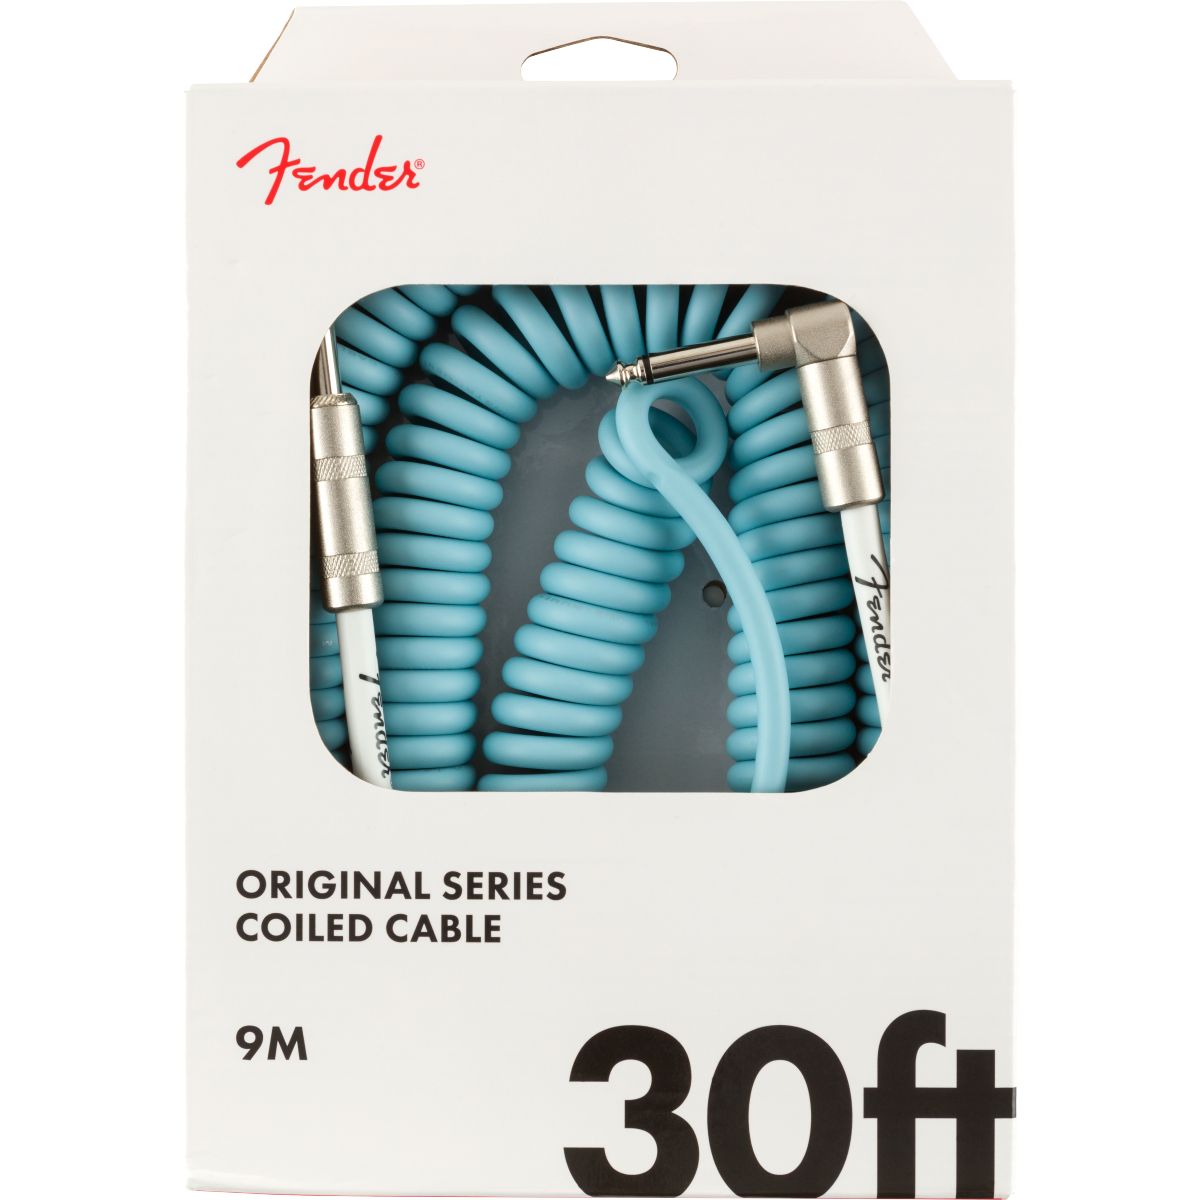 Fender Original Series Coil Cable